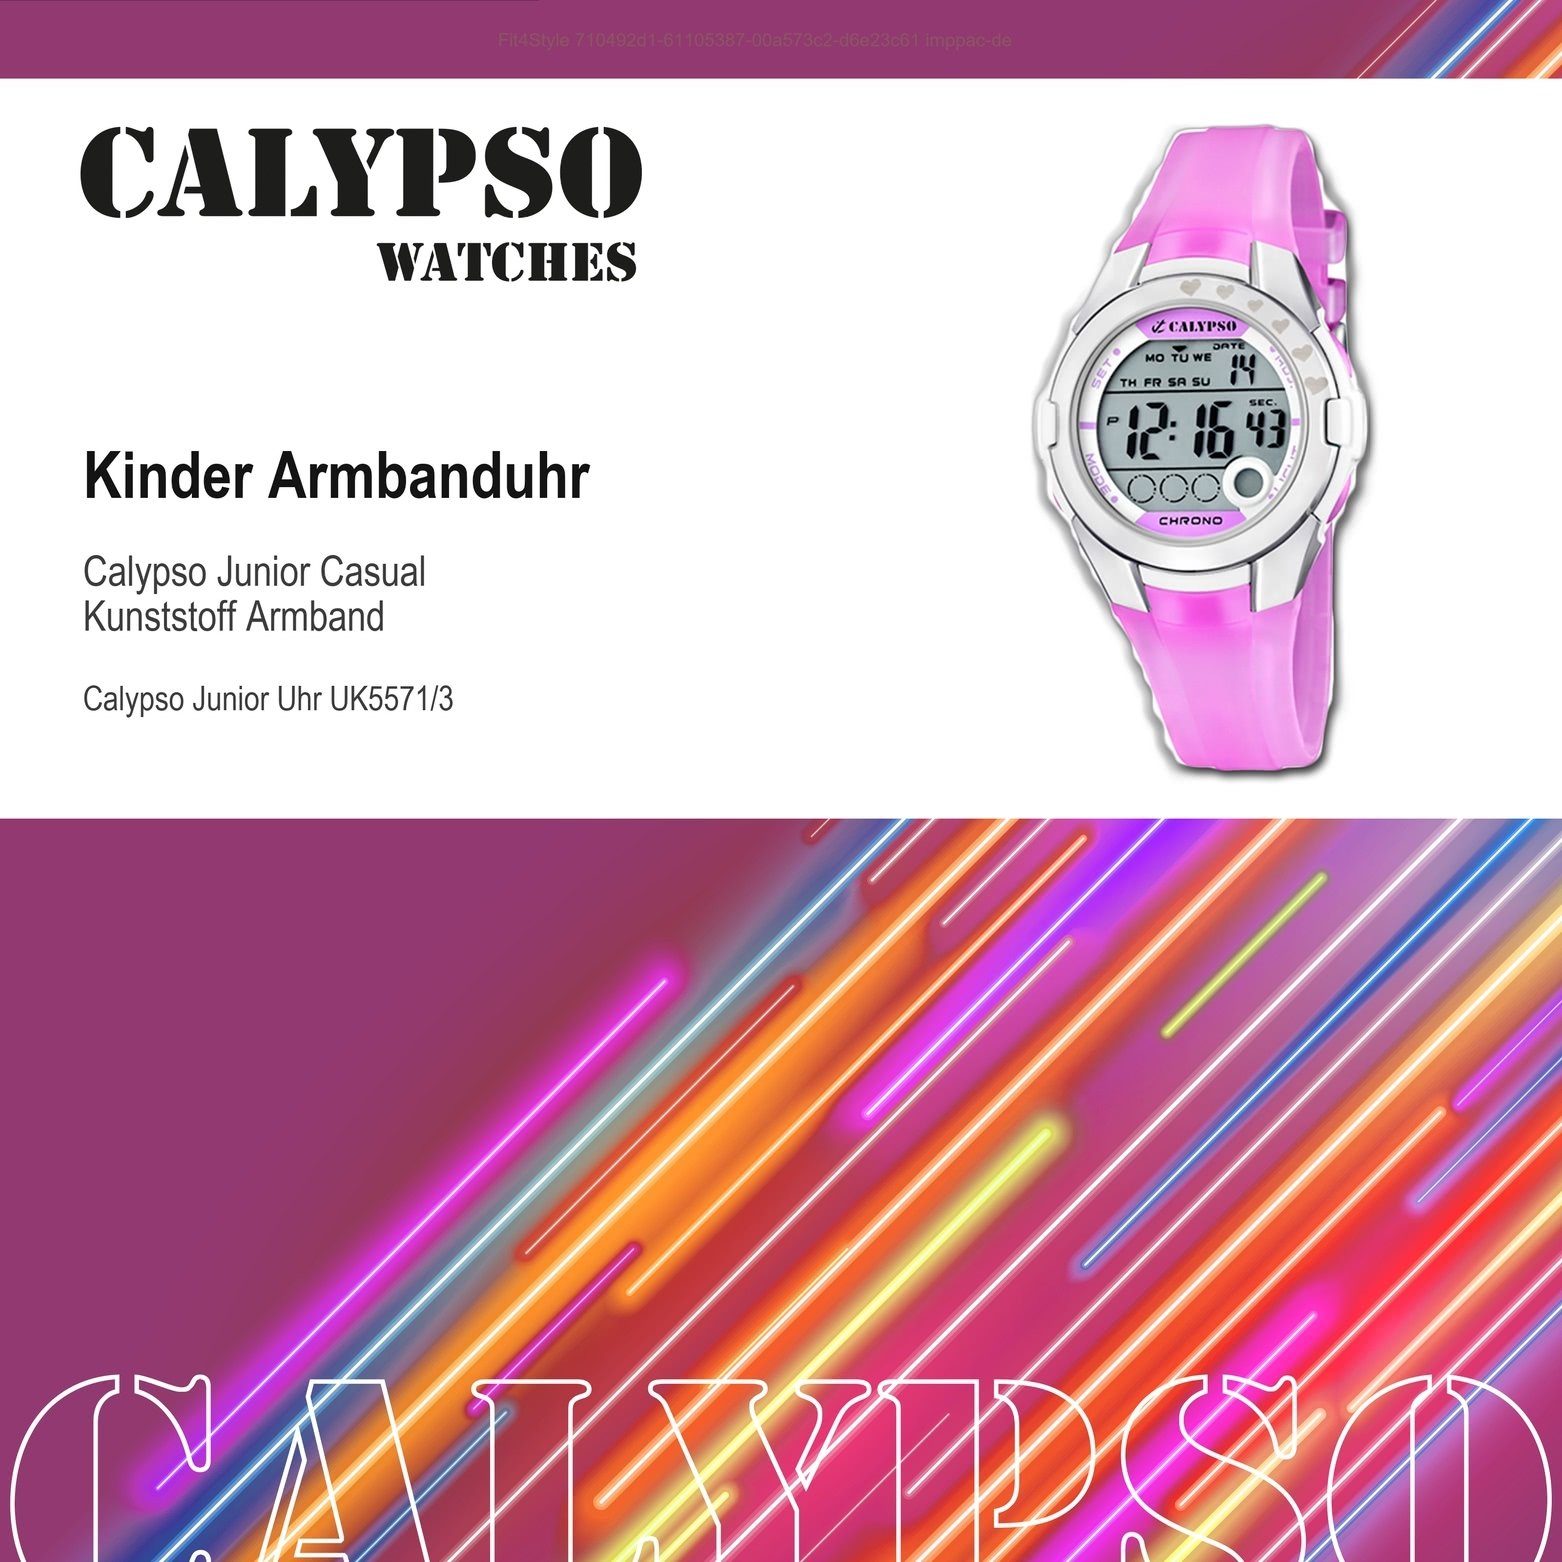 Kunststoffband, CALYPSO Kunststoffarmband K5571/3 rund, WATCHES Uhr Kinder Casual Calypso Armbanduhr Digitaluhr helllila, Kinder